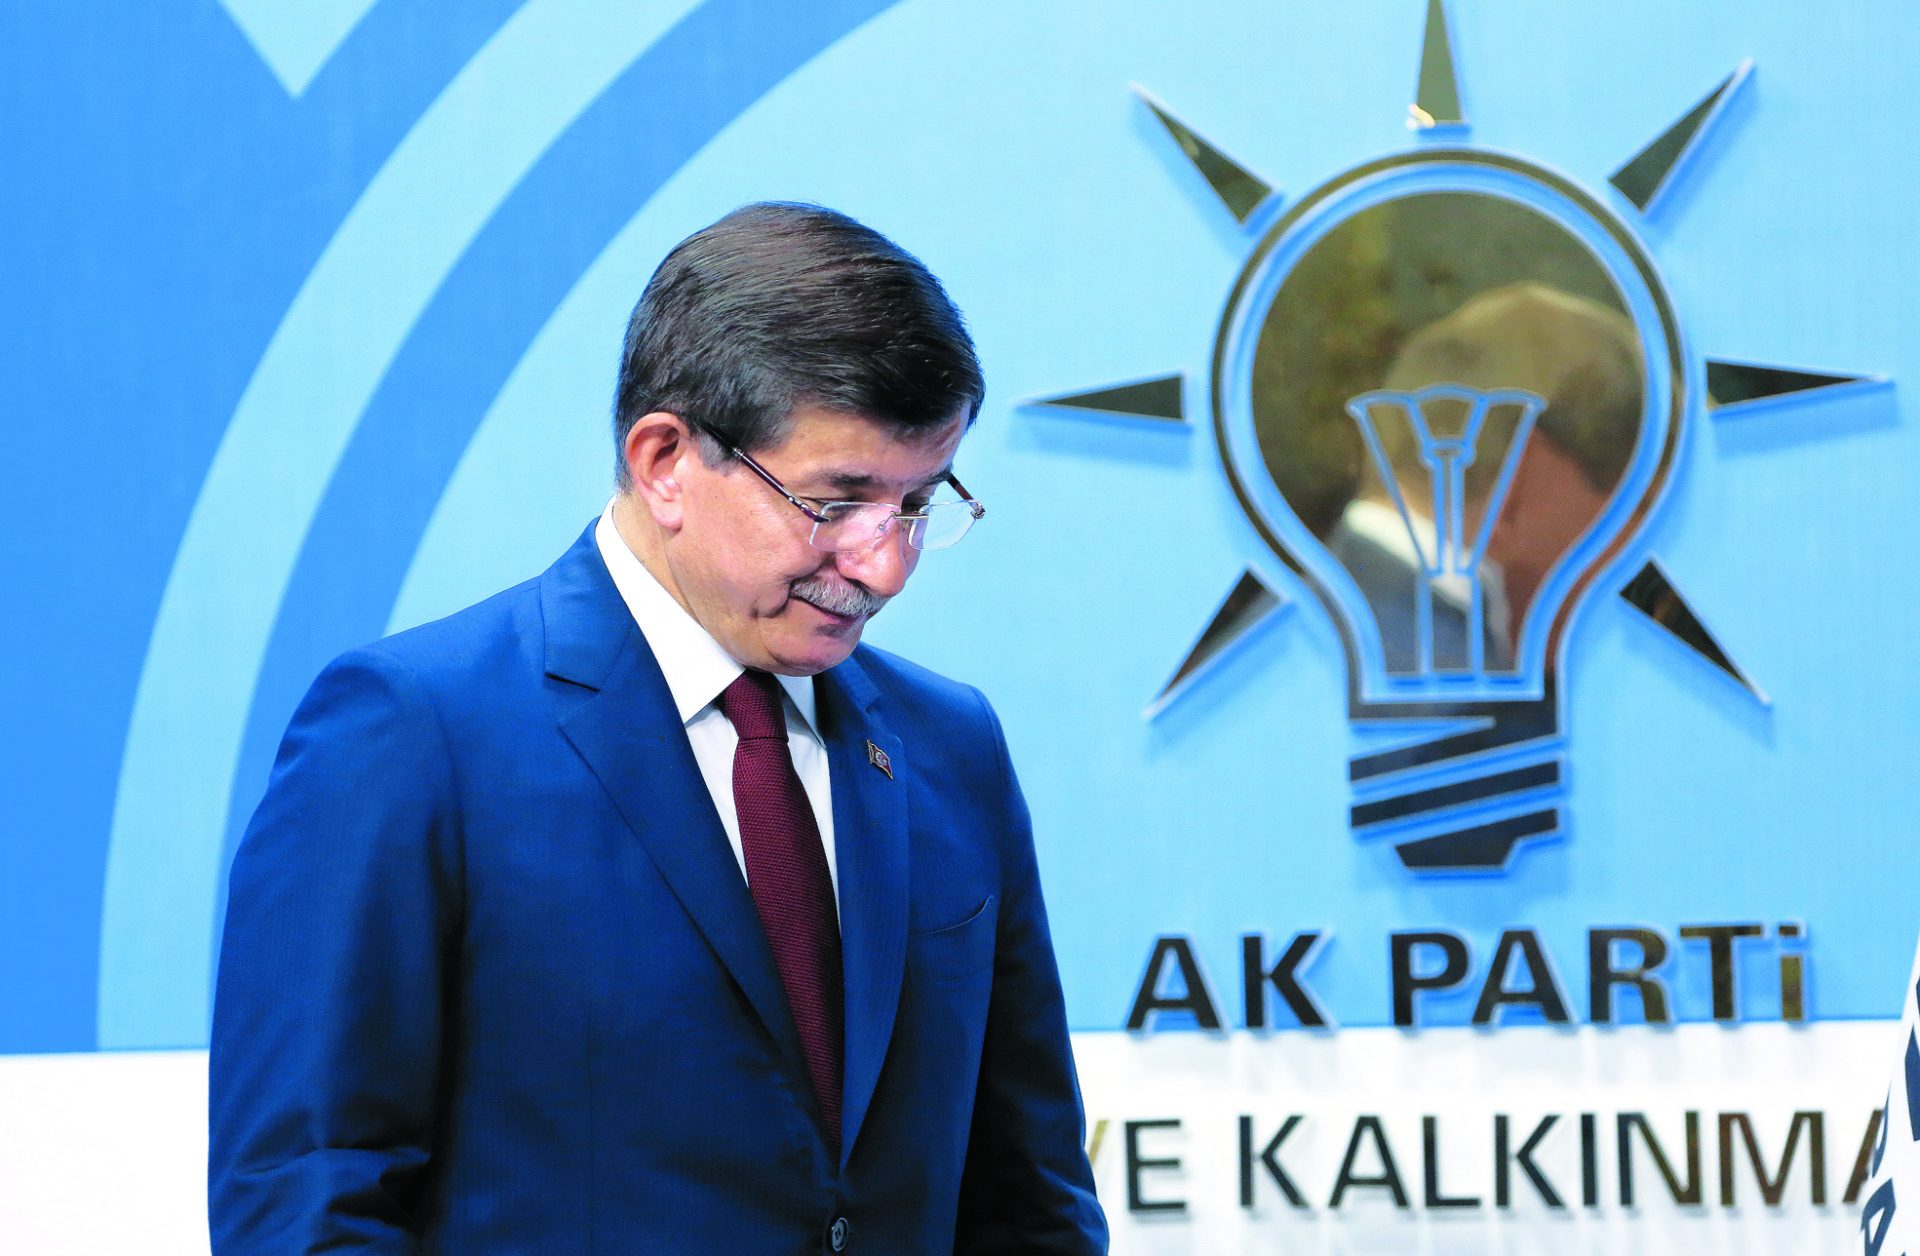 Saída do primeiro-ministro turco terá consequências